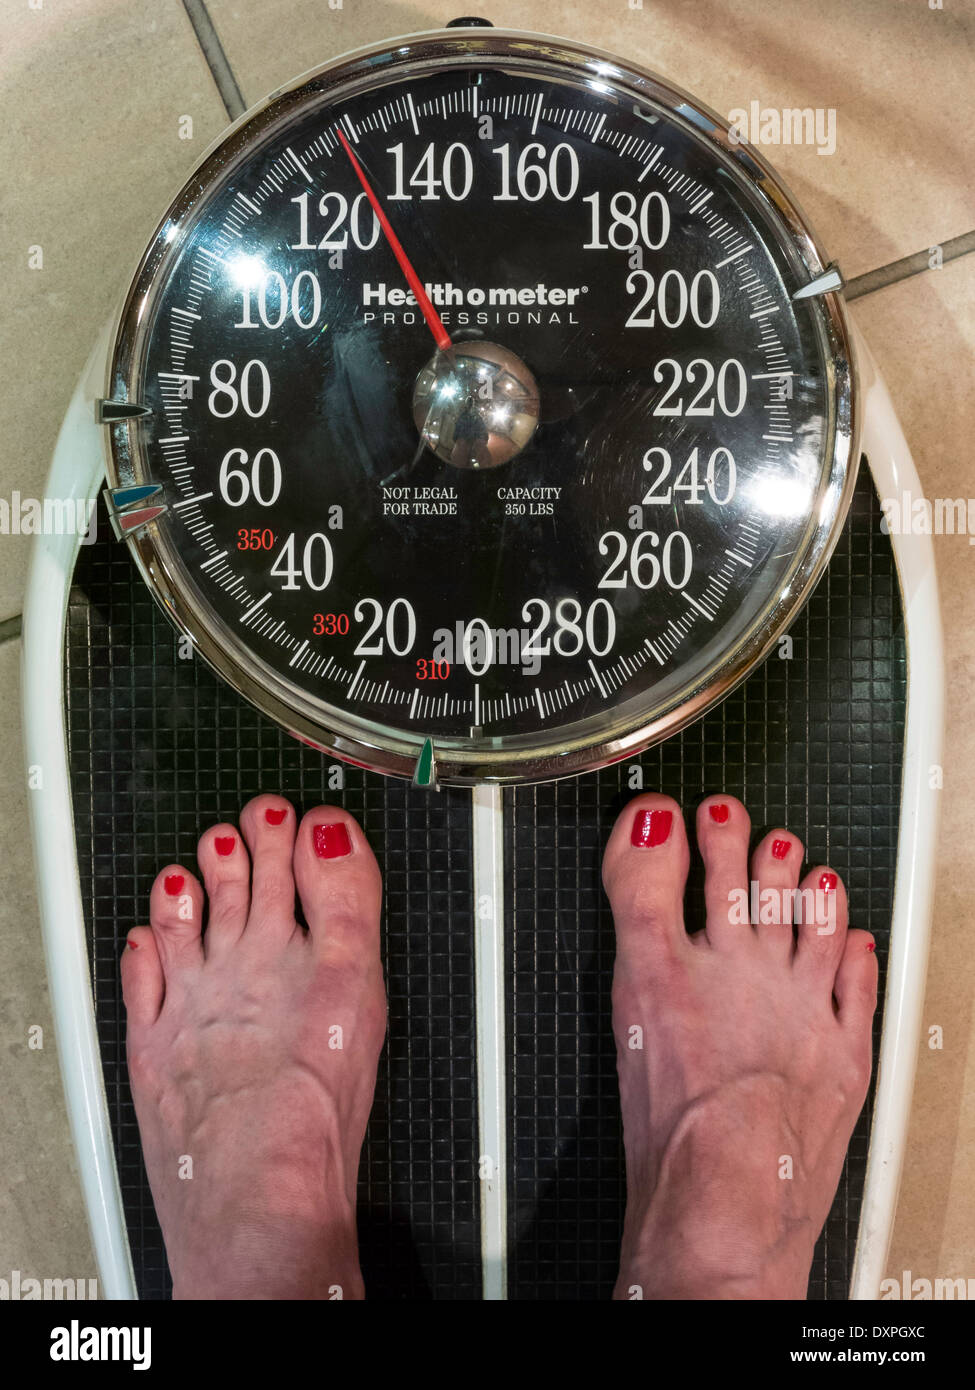 https://c8.alamy.com/comp/DXPGXC/woman-weighing-herself-on-bathroom-scale-usa-DXPGXC.jpg